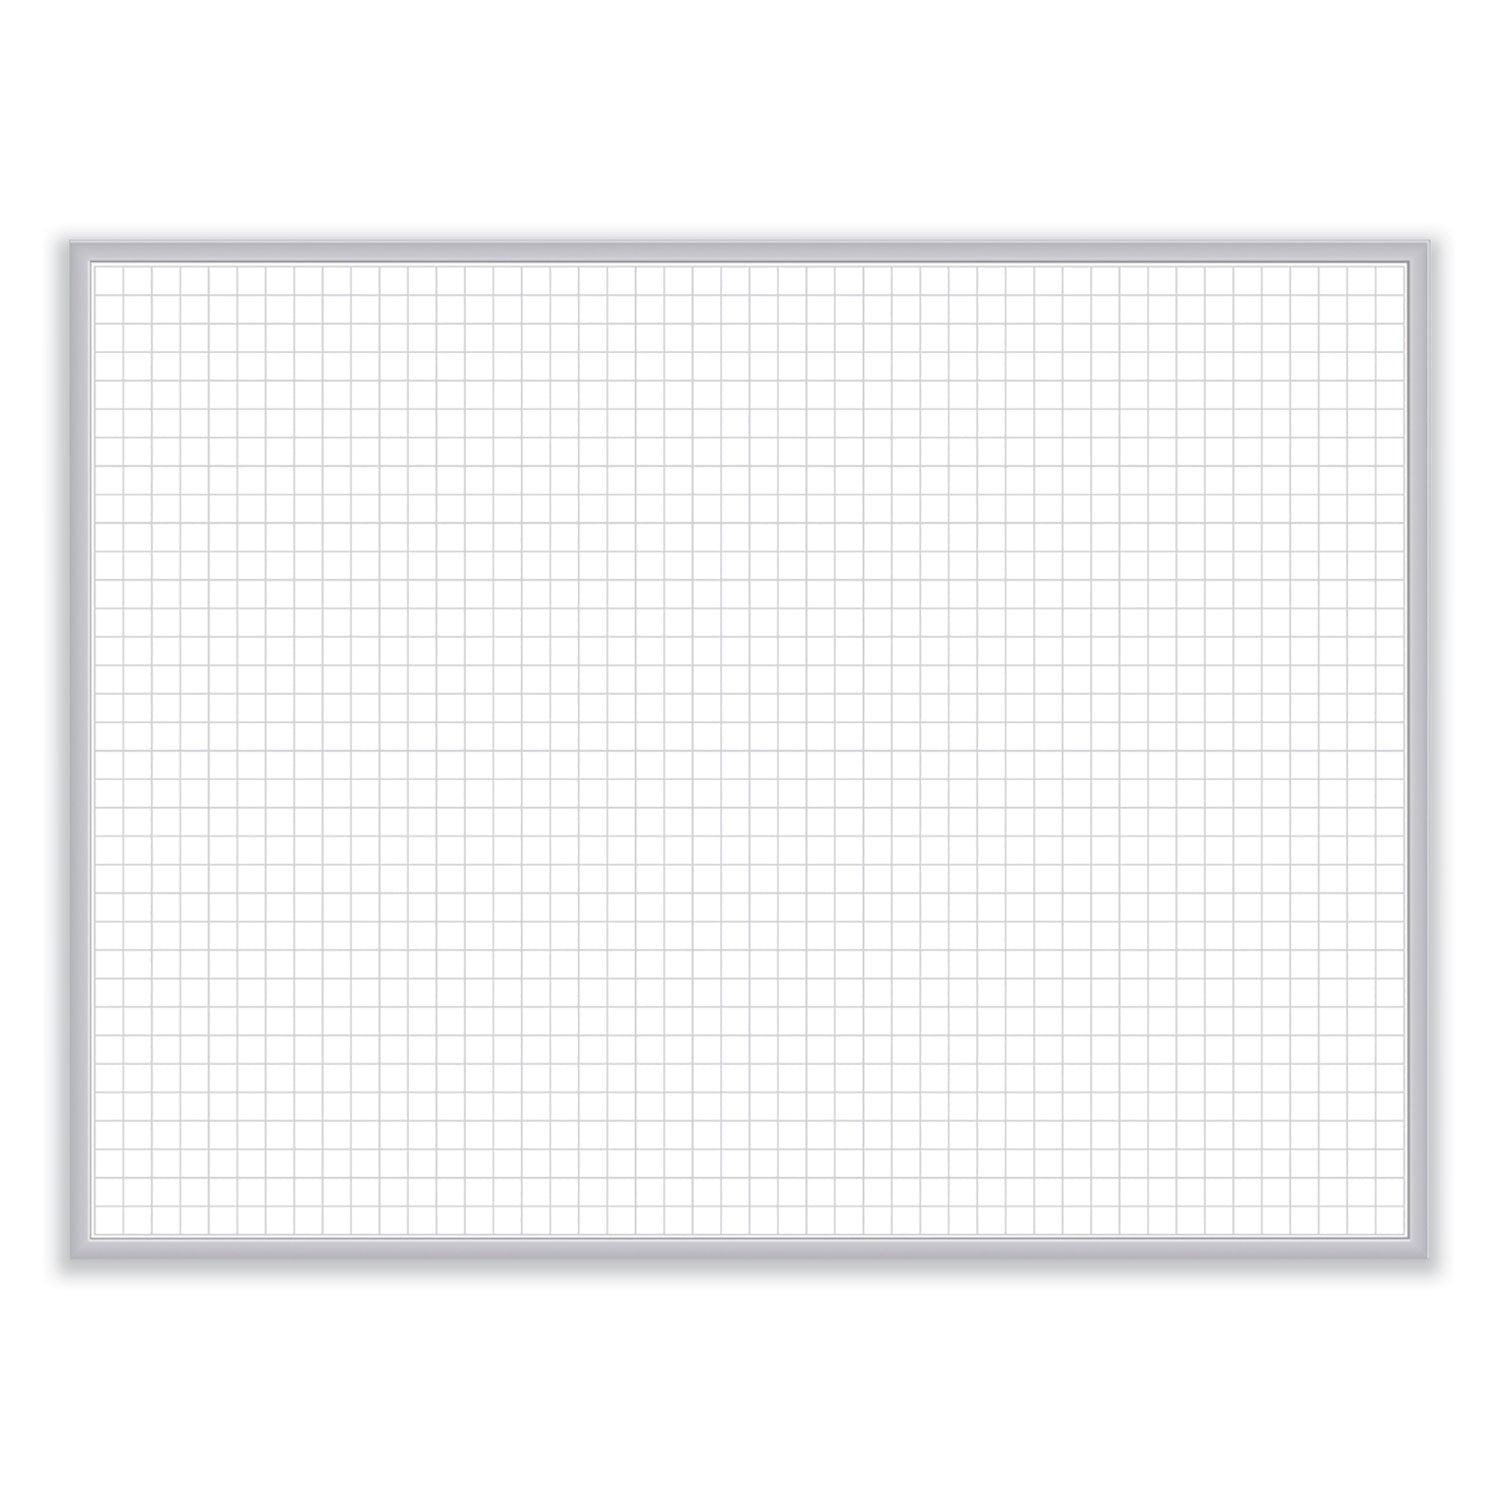 1-x-1-grid-magnetic-whiteboard-485-x-365-white-gray-surface-satin-aluminum-frame-ships-in-7-10-business-days_ghegrpm321g34 - 1